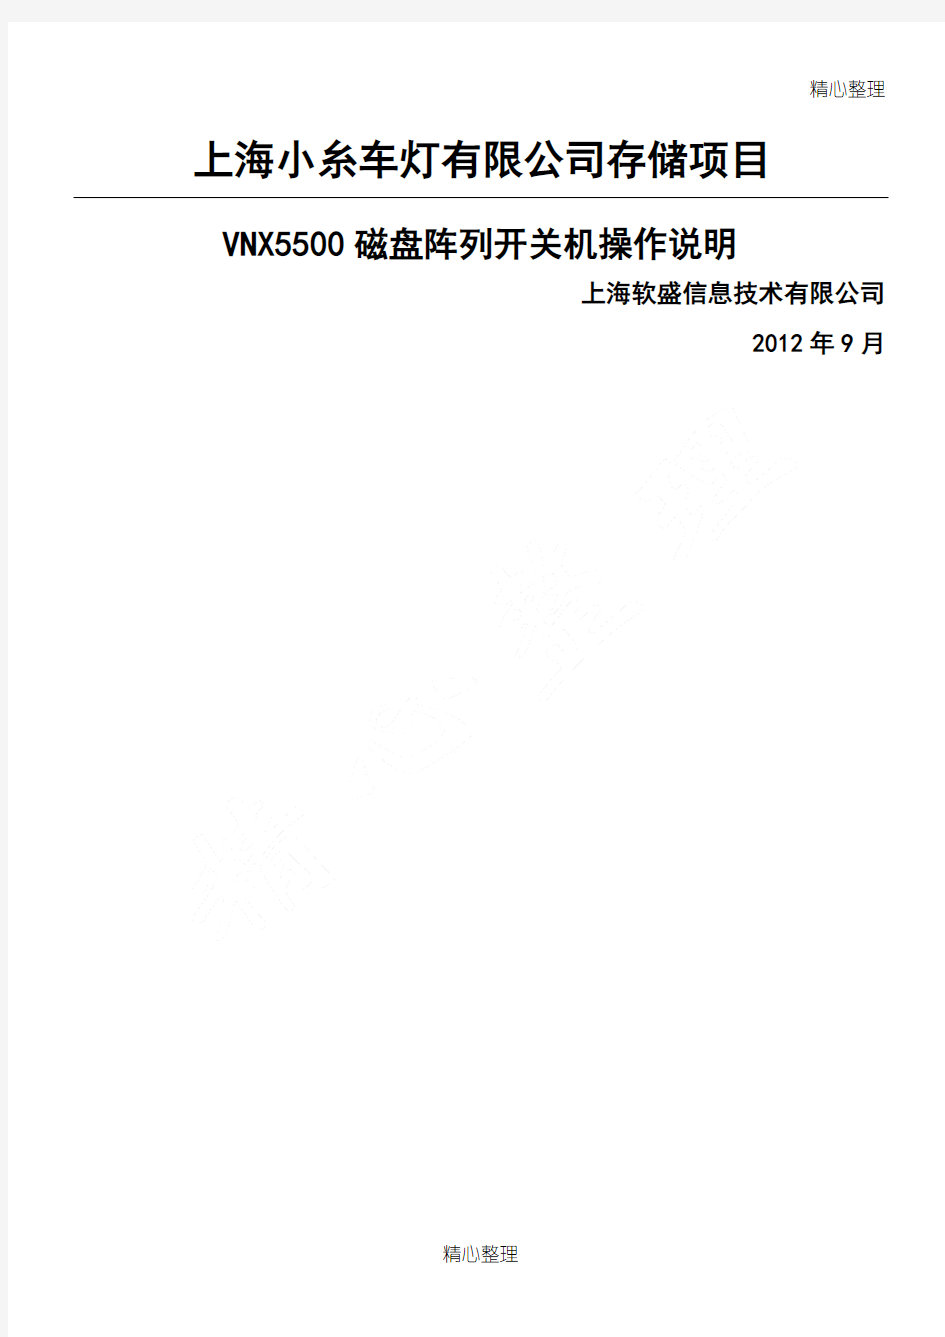 EMC-VNX5500磁盘阵列开关机操作指南